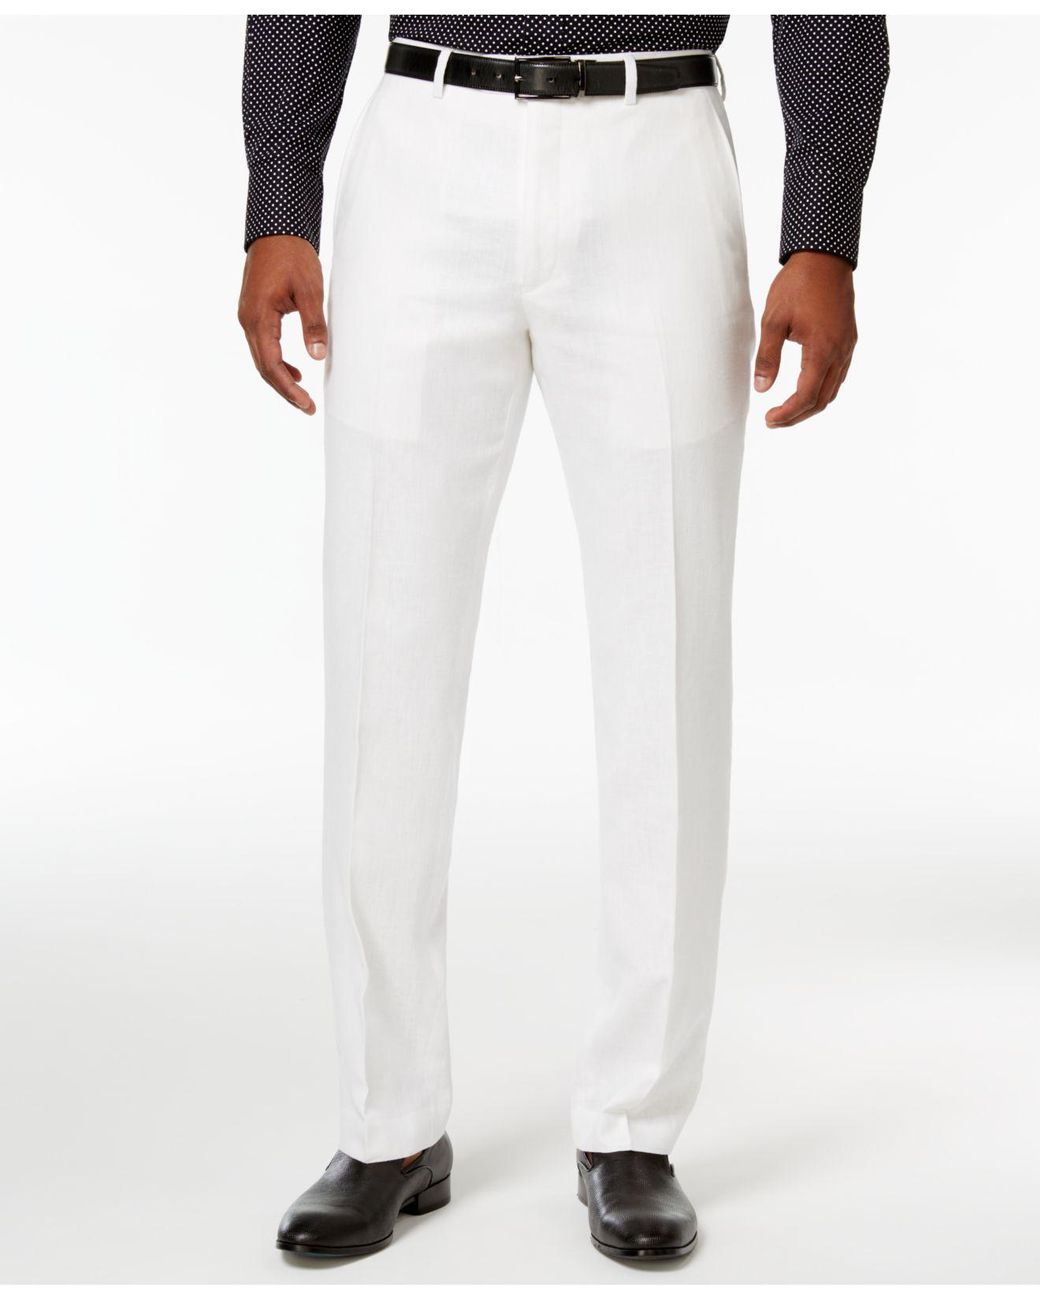 Details more than 77 white linen dress pants latest - in.eteachers